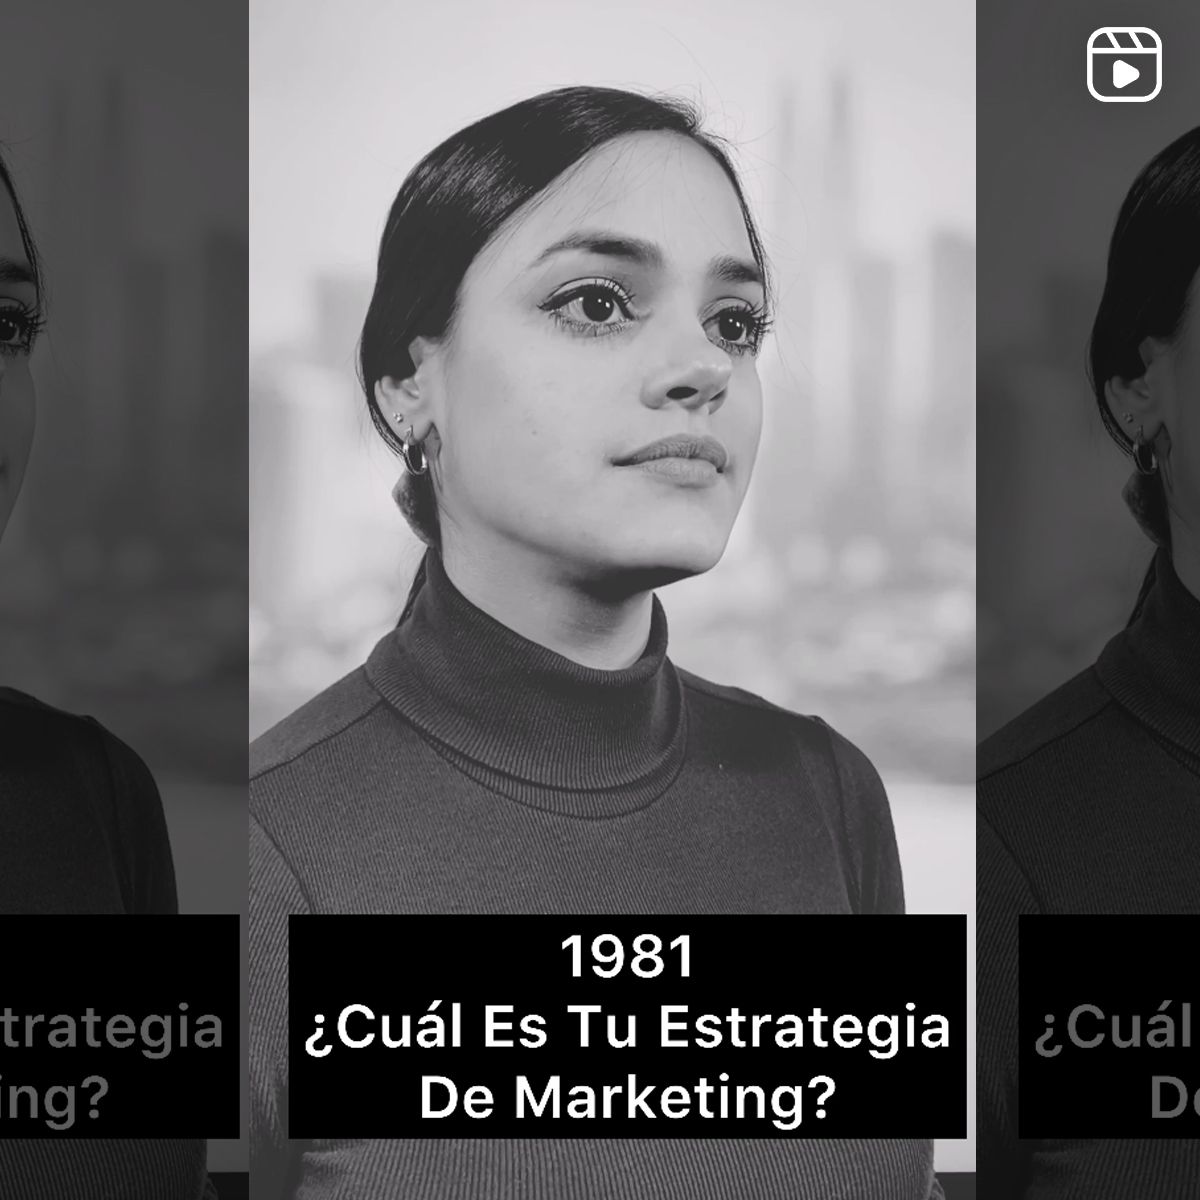 Estrategia de Marketing 1981 Vs 2021